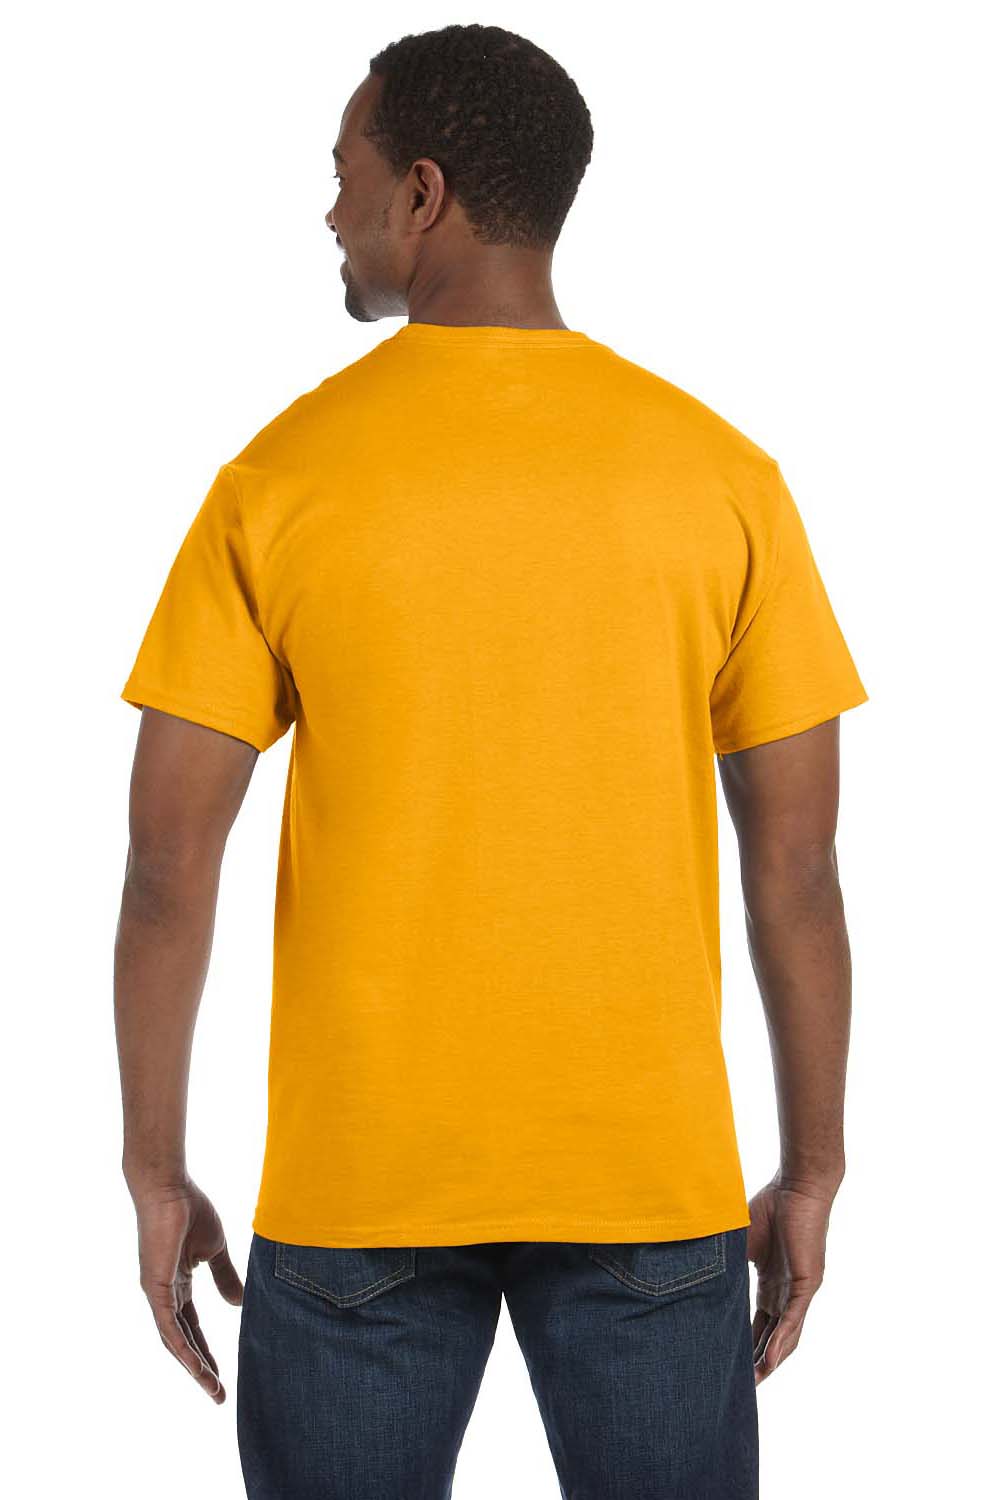 Jerzees 29M Mens Dri-Power Moisture Wicking Short Sleeve Crewneck T-Shirt Gold Back